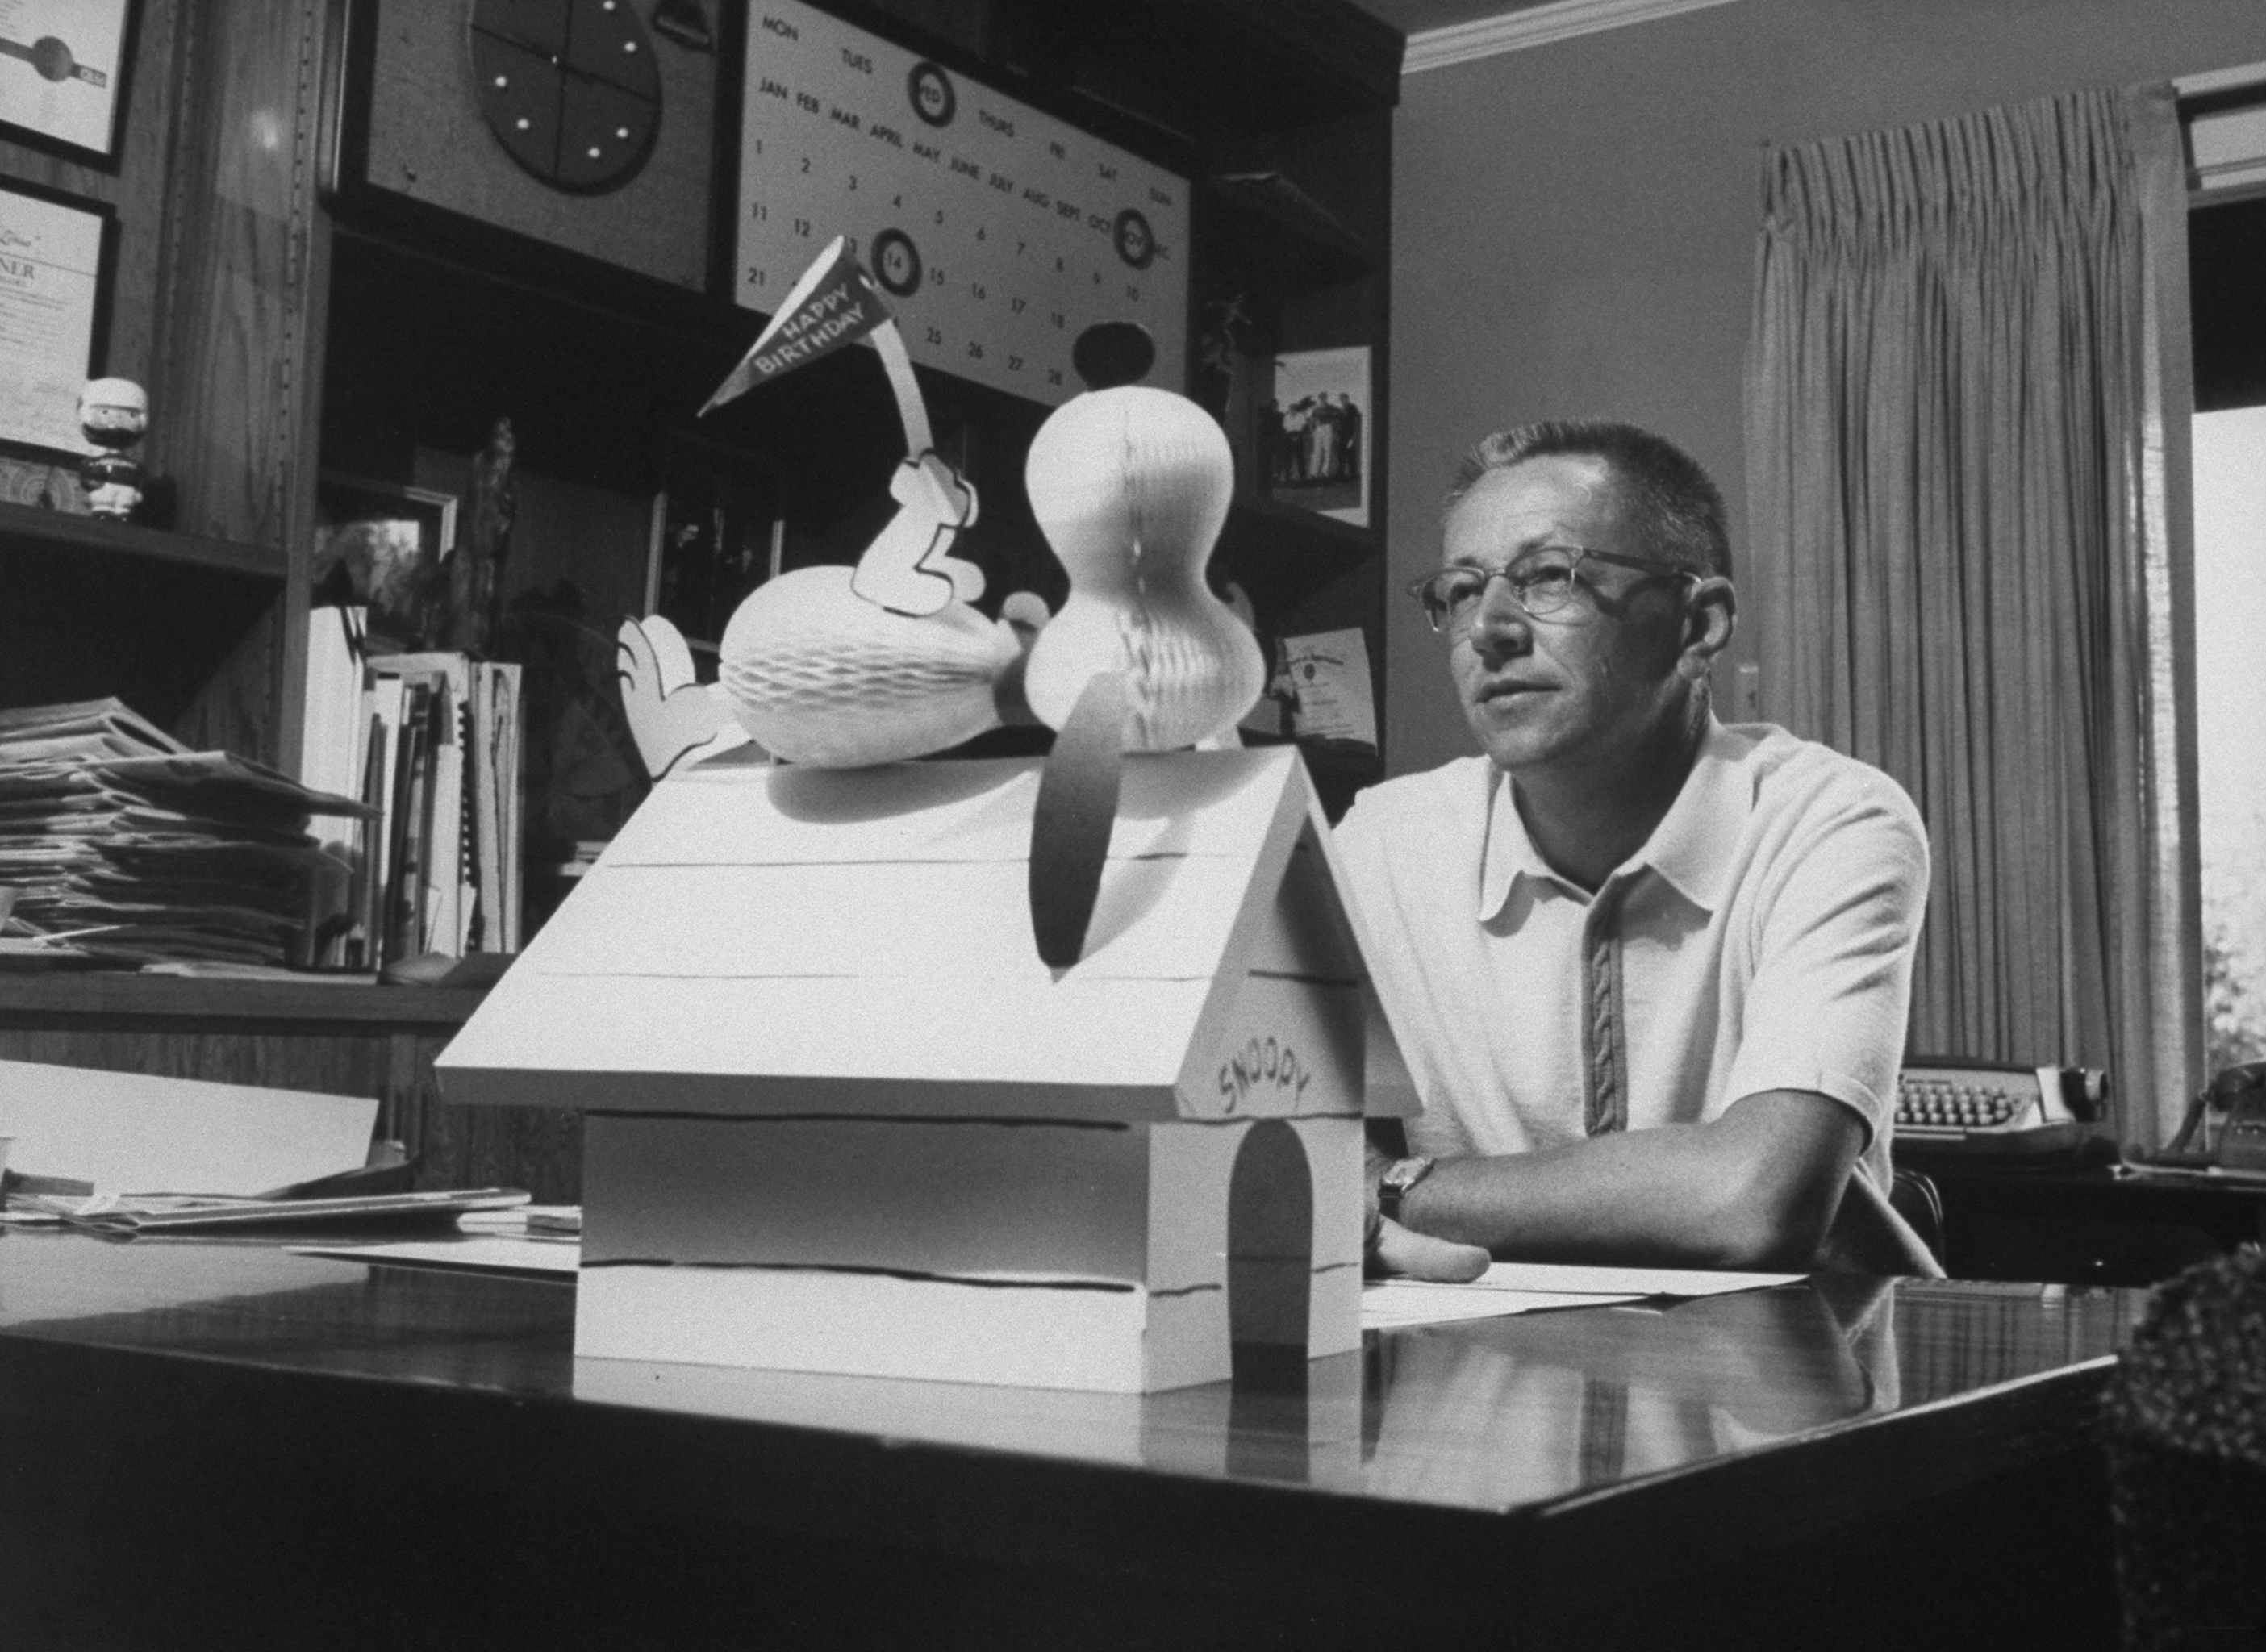 'Peanuts' cartoonist and creator Charles M. Schulz